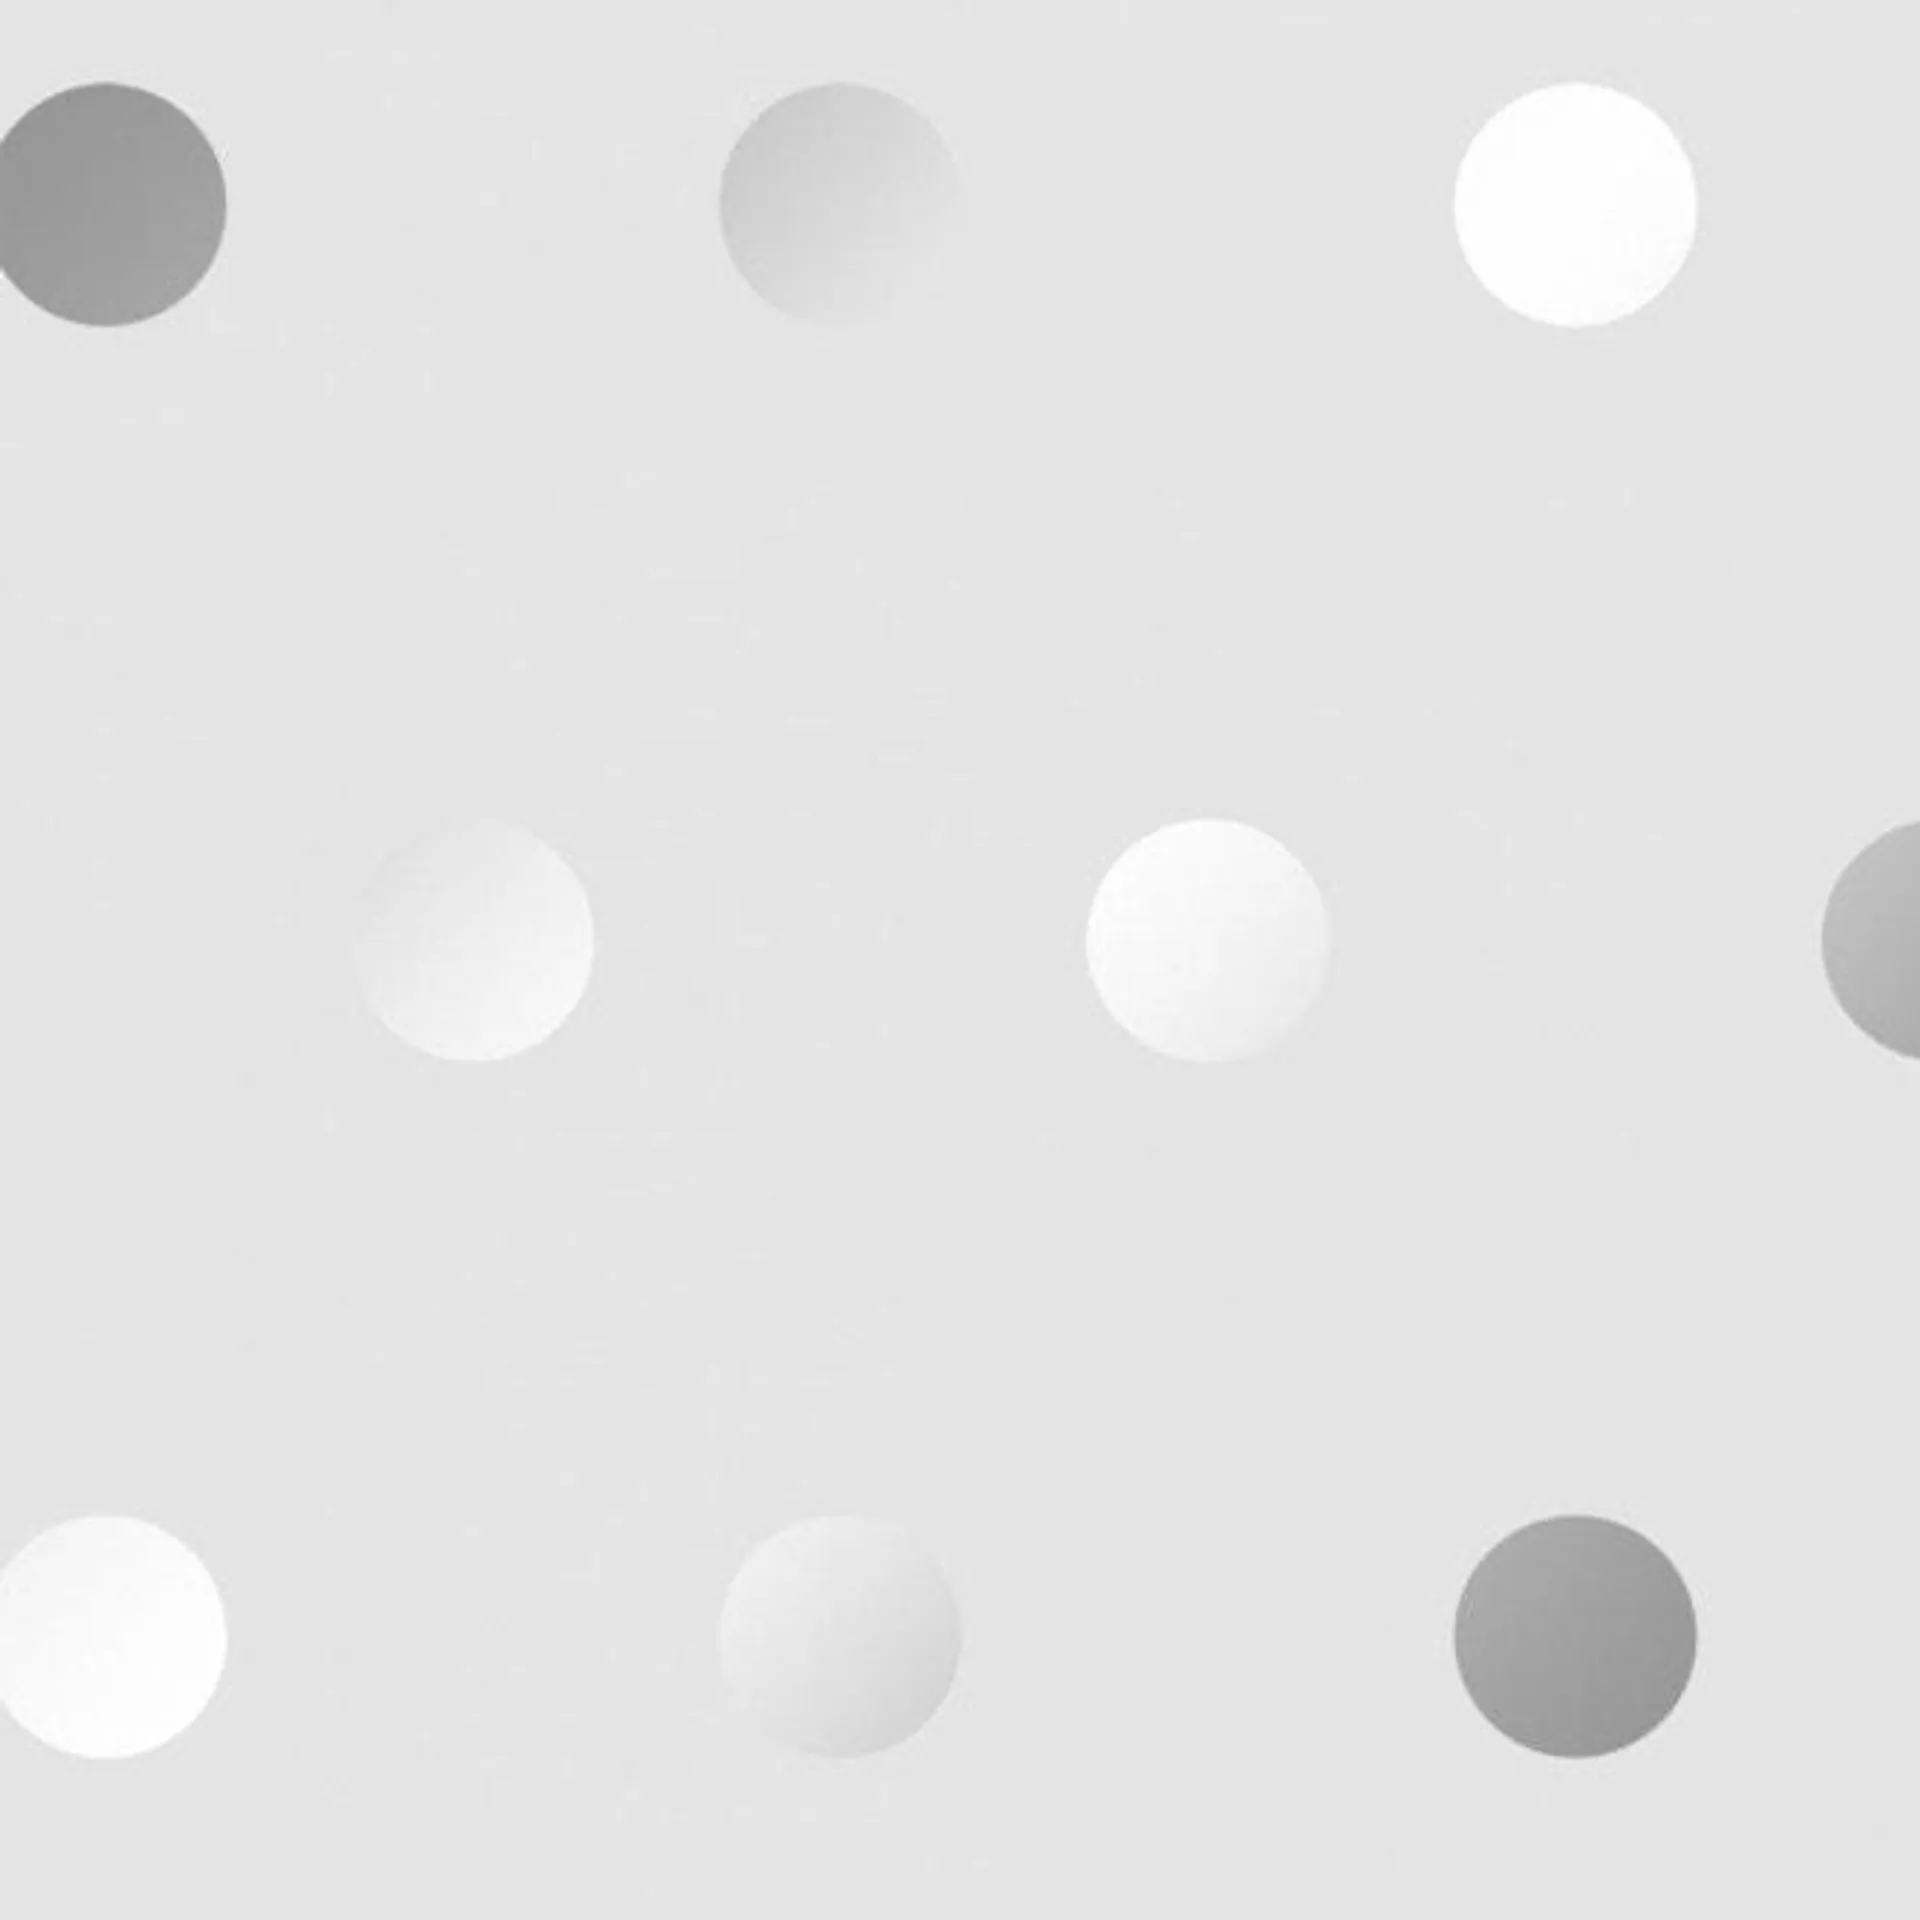 Polka Dots wallpaper in grey & silver